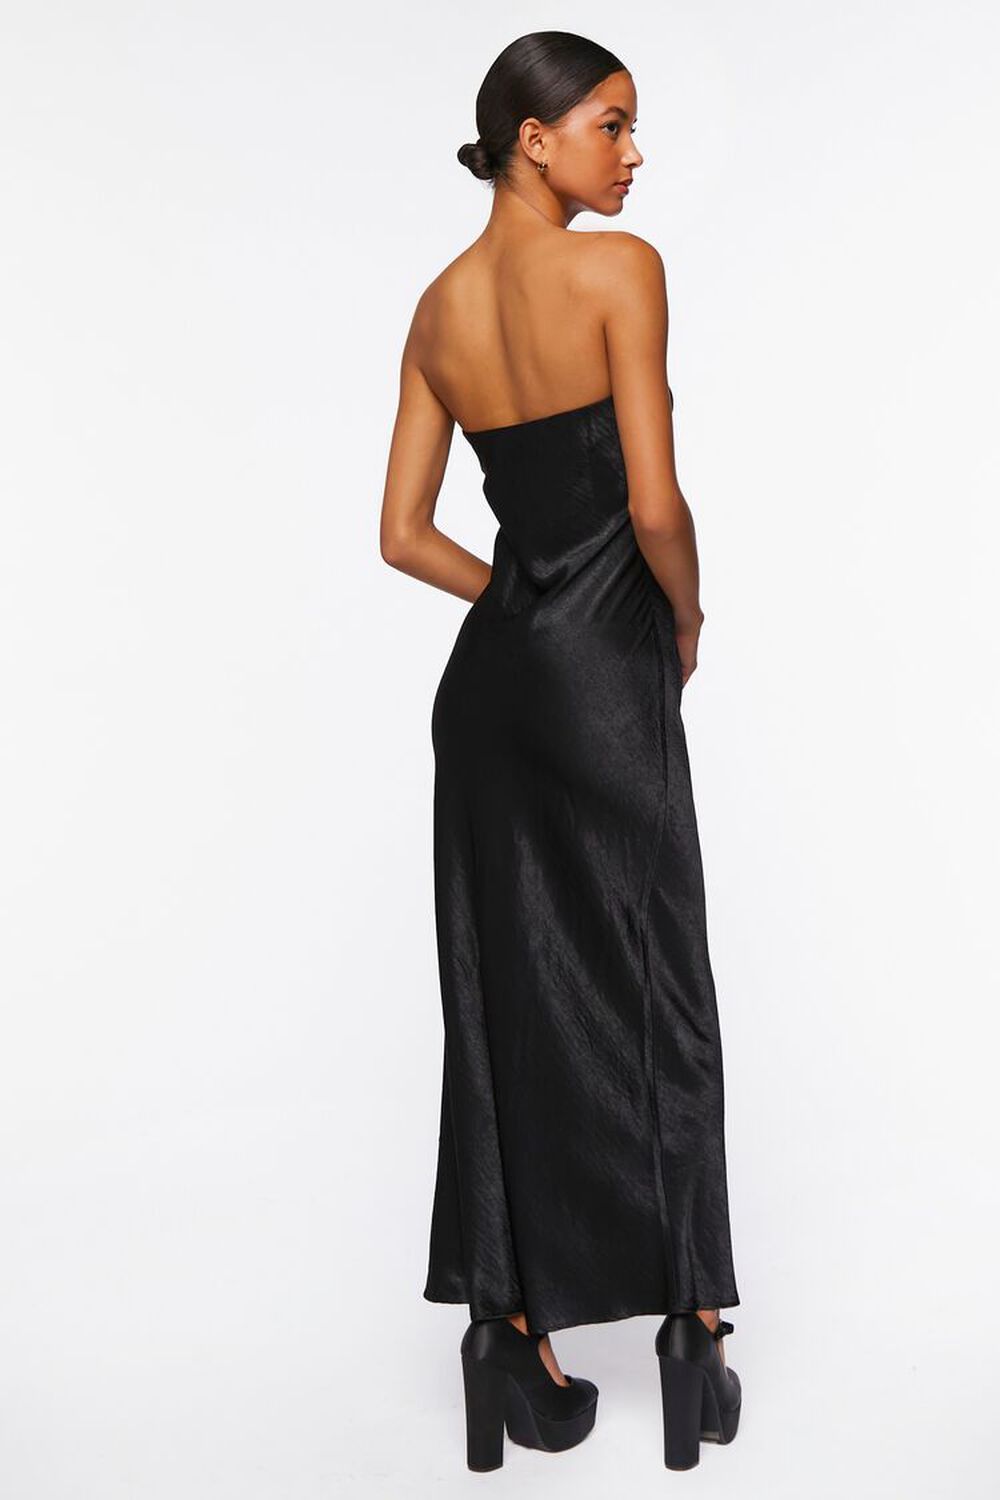 BLACK Satin Strapless Maxi Dress, image 3